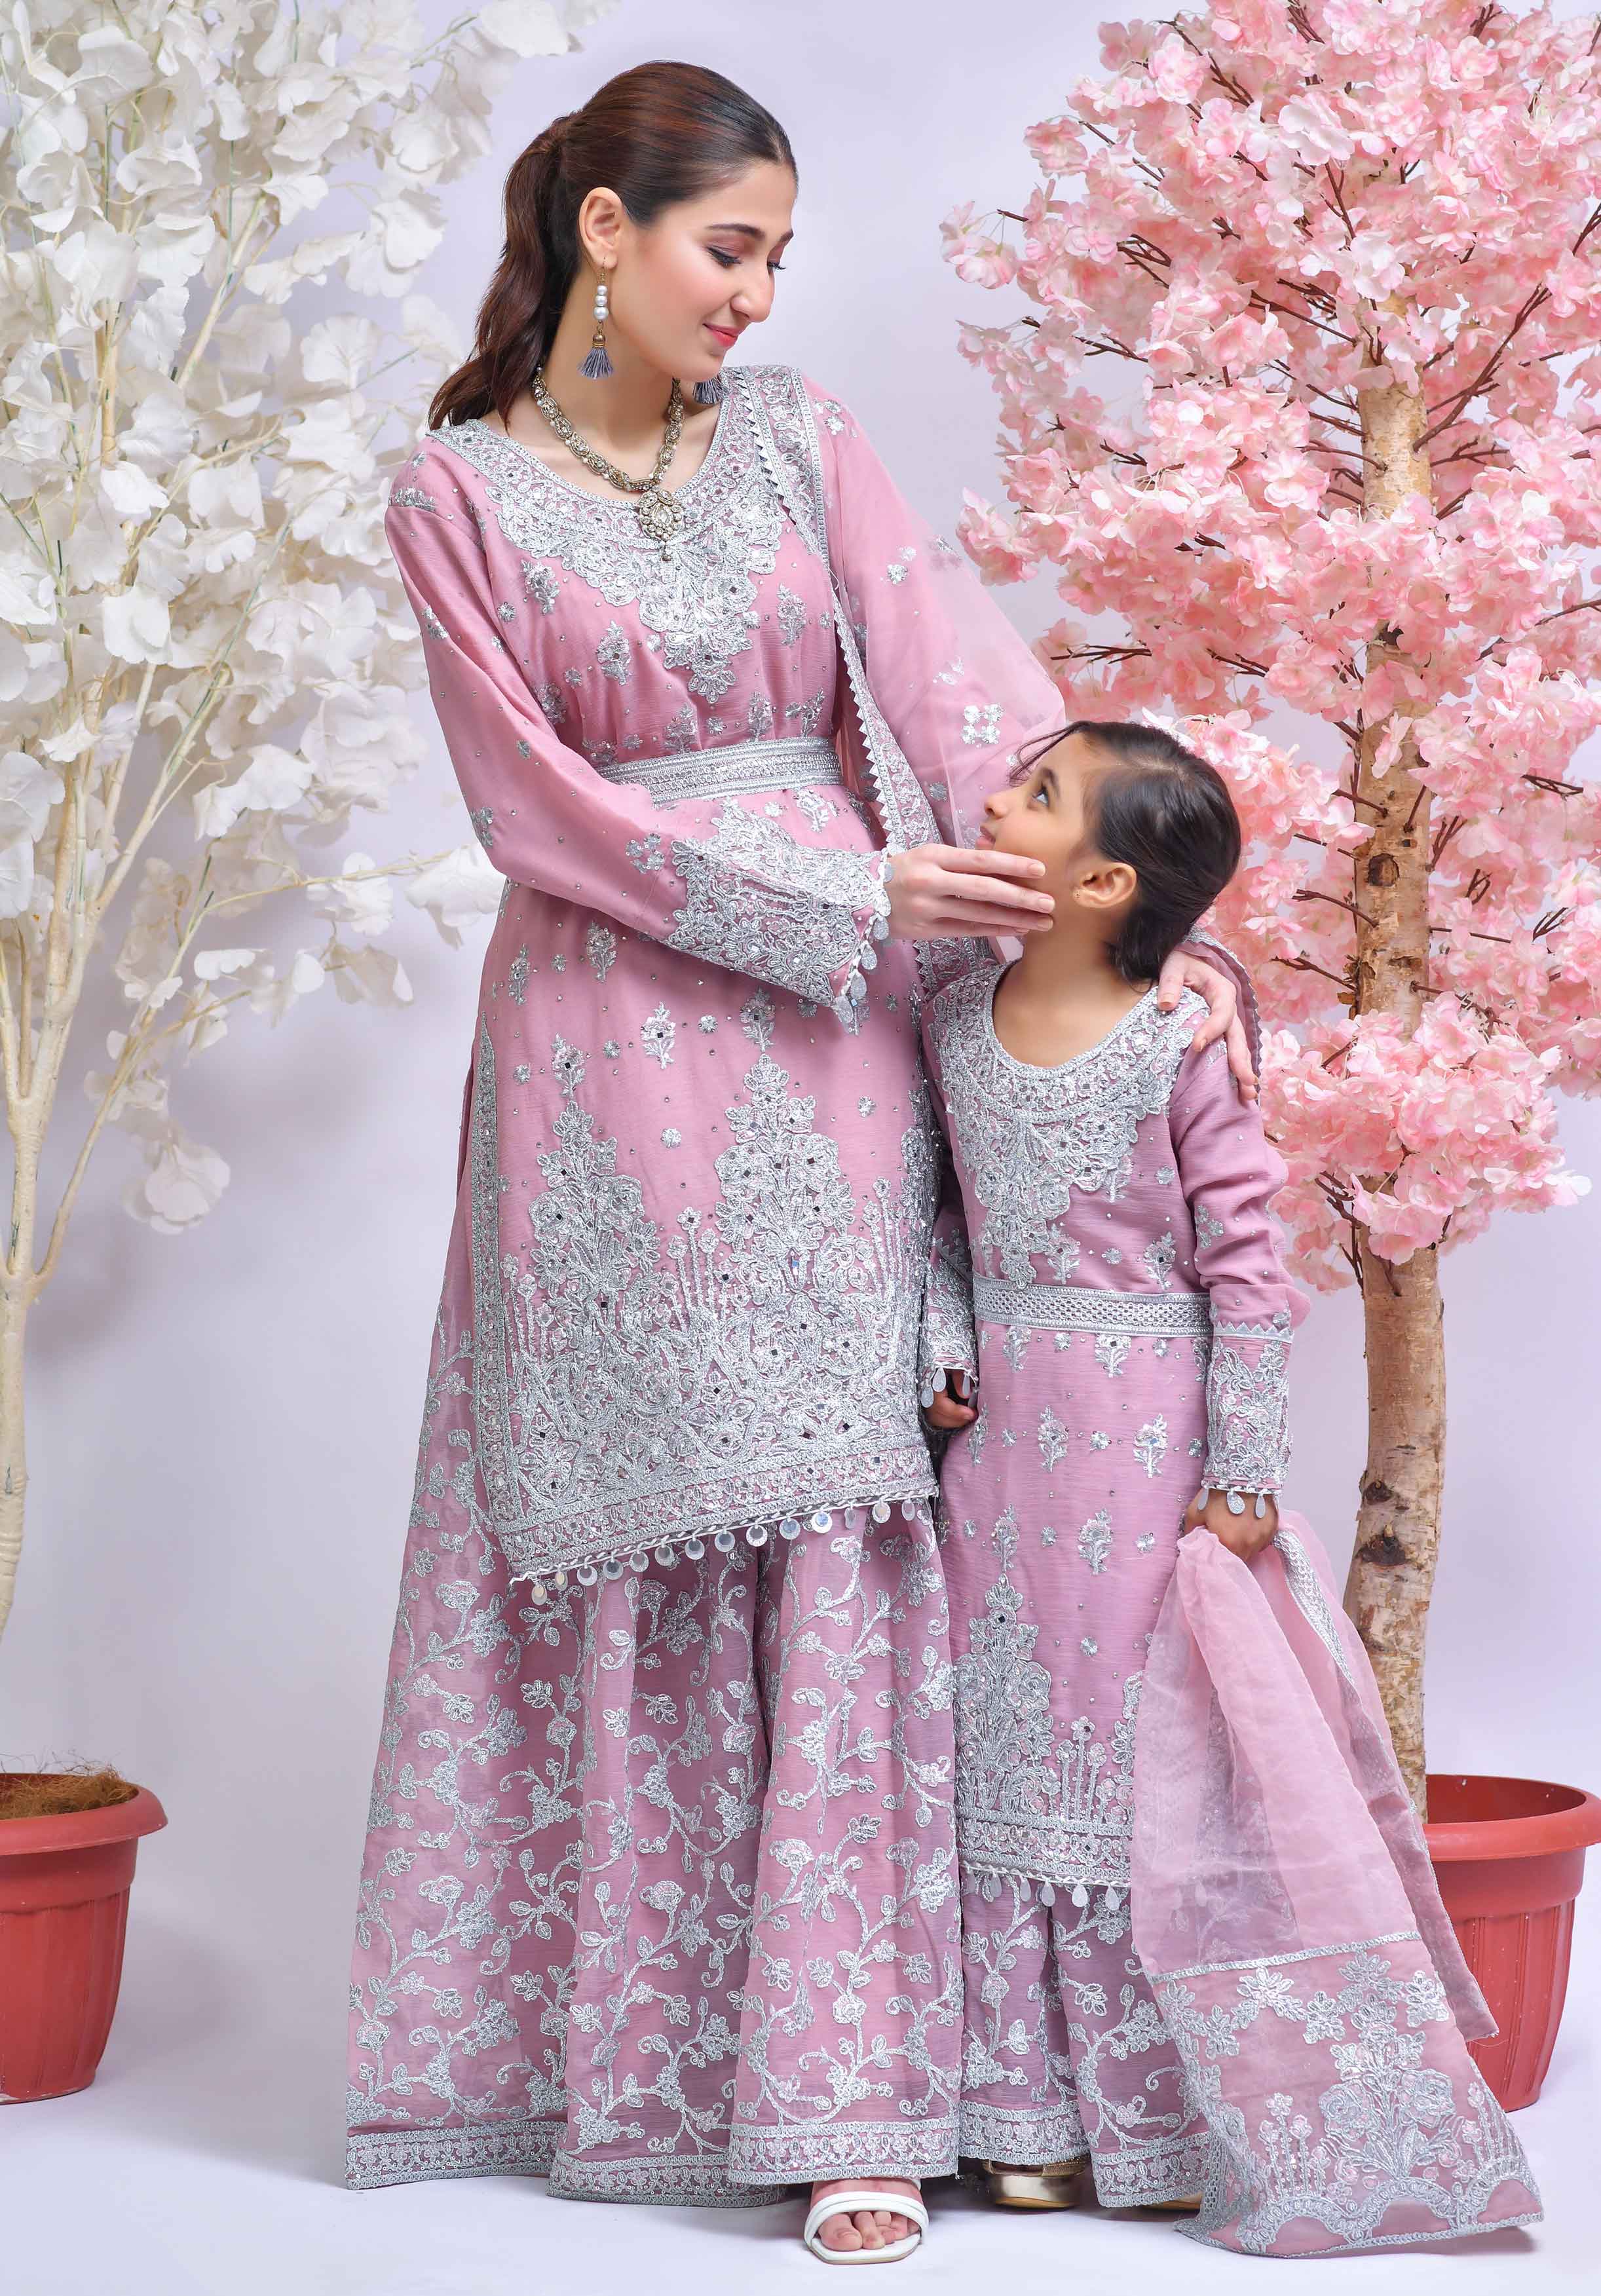 Simrans Mother & Daughter Dusty Pink Ladies Sharara Oufit DesiPosh